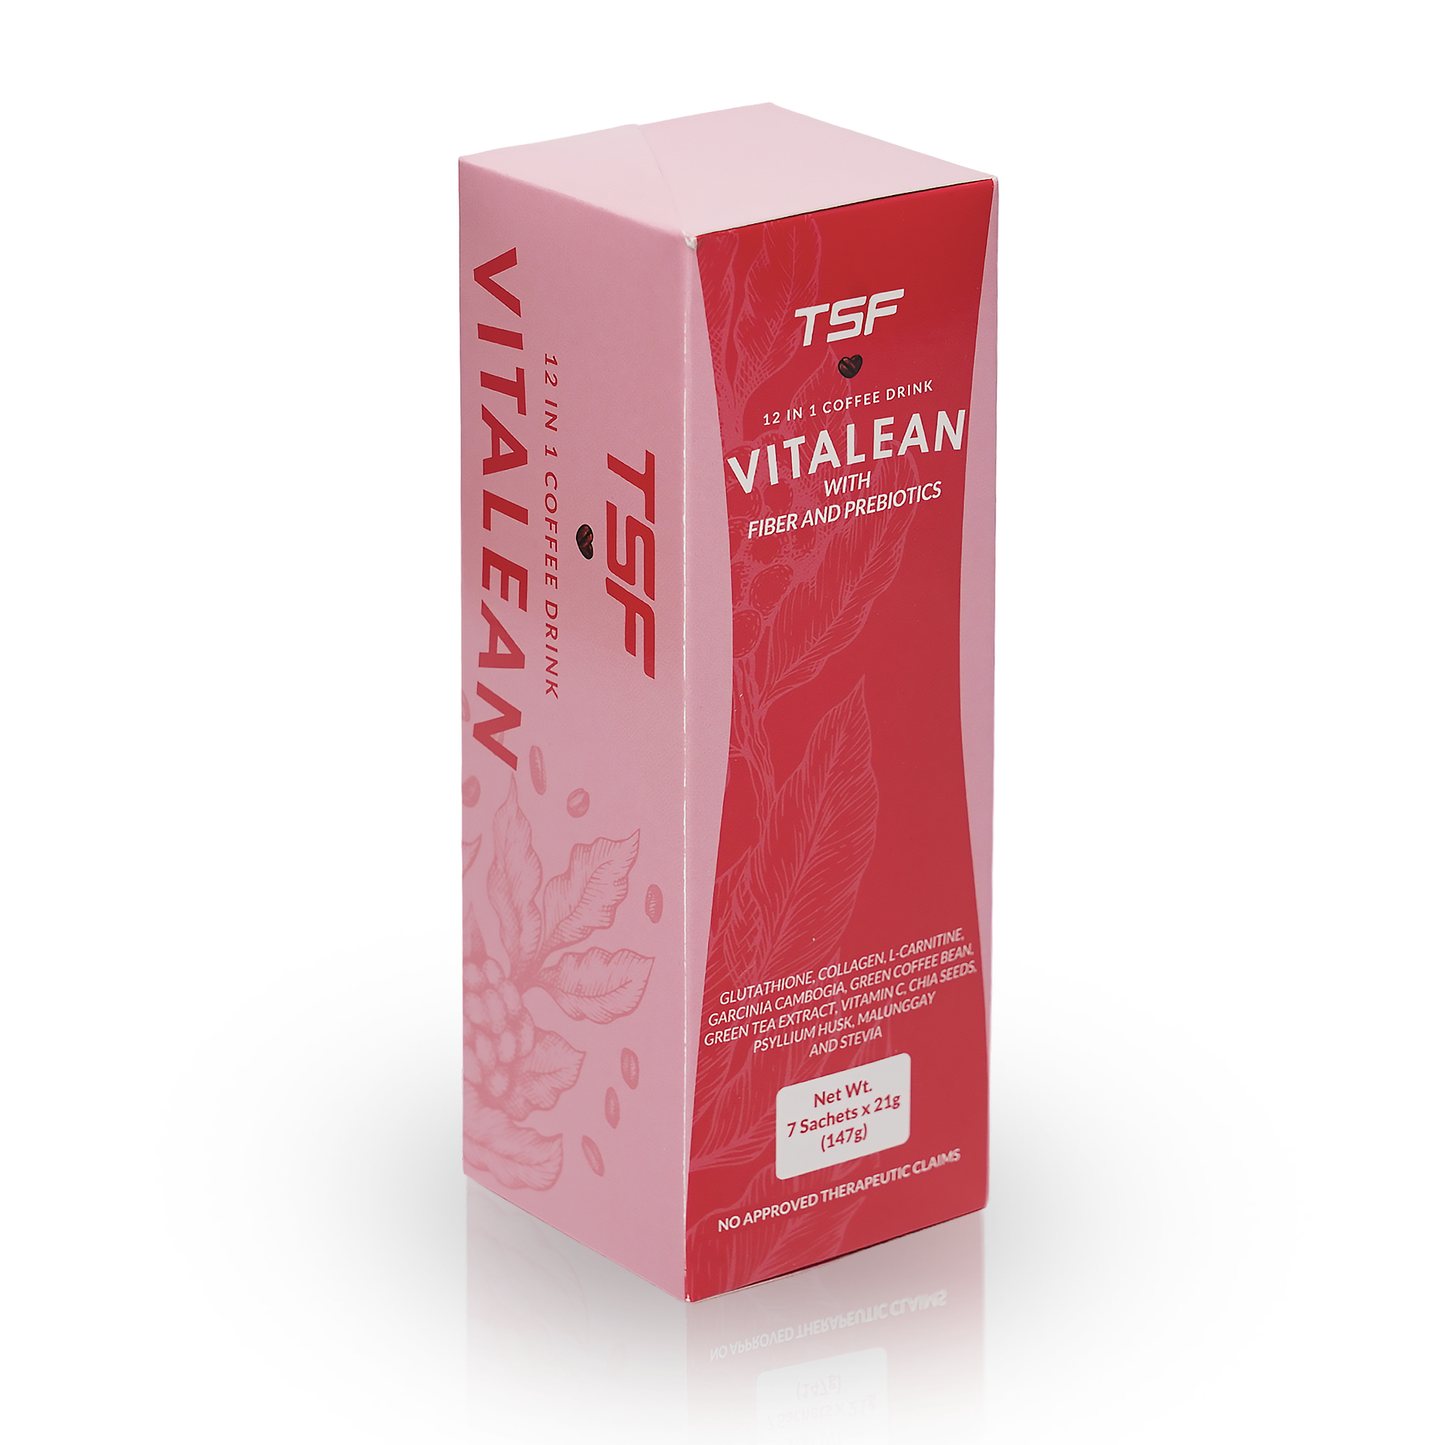 Vitalean Coffee Fiber & Prebiotics (1 box)